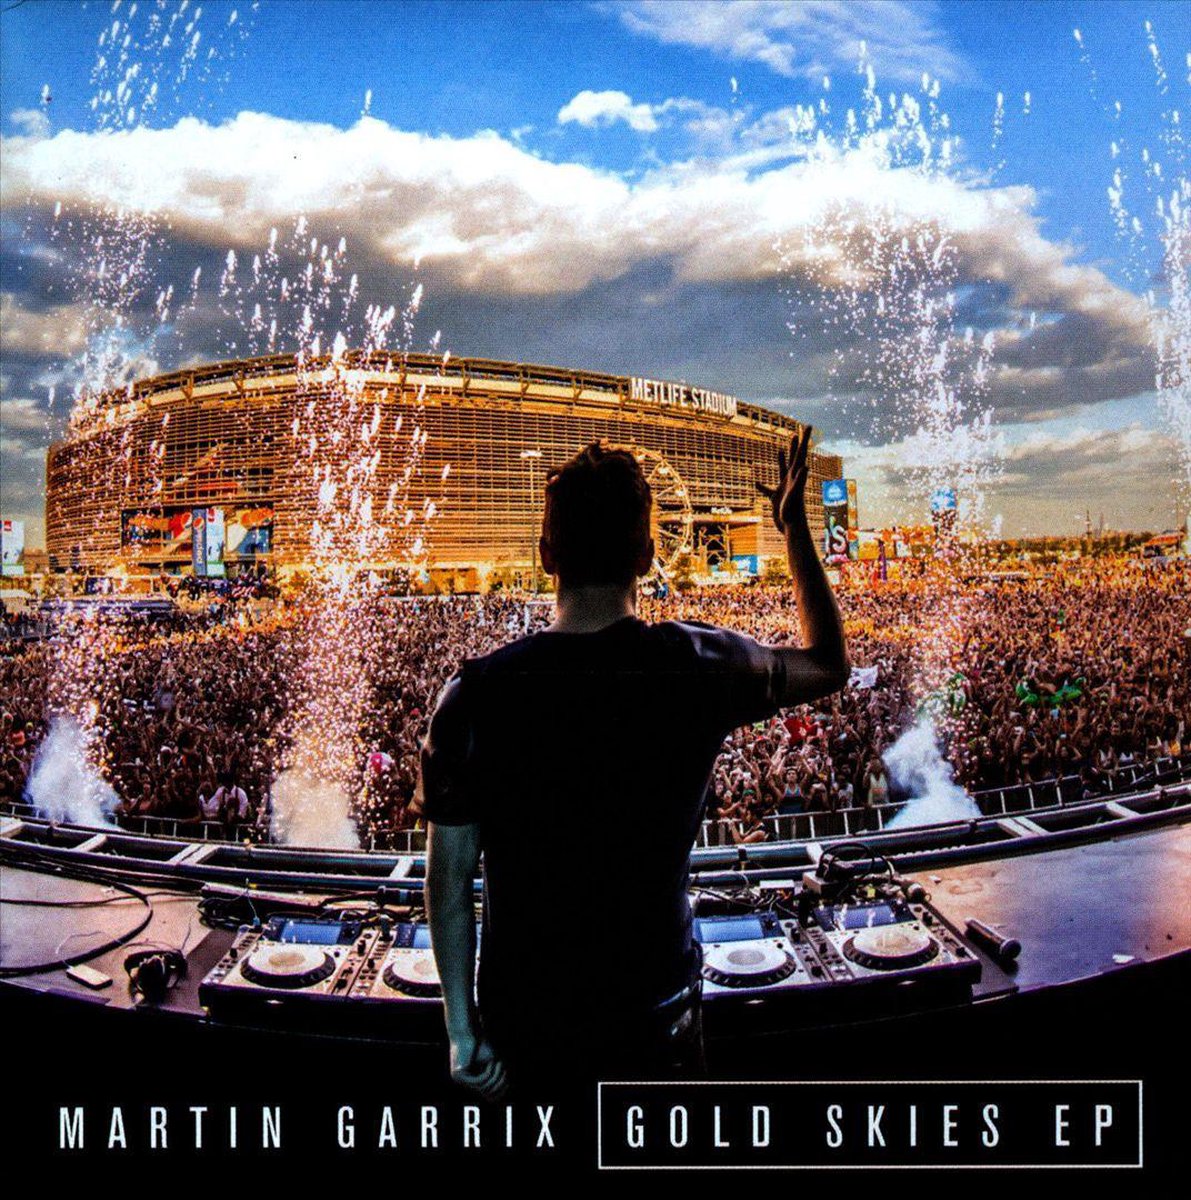 Martin Garrix - Gold Skies - Martin Garrix